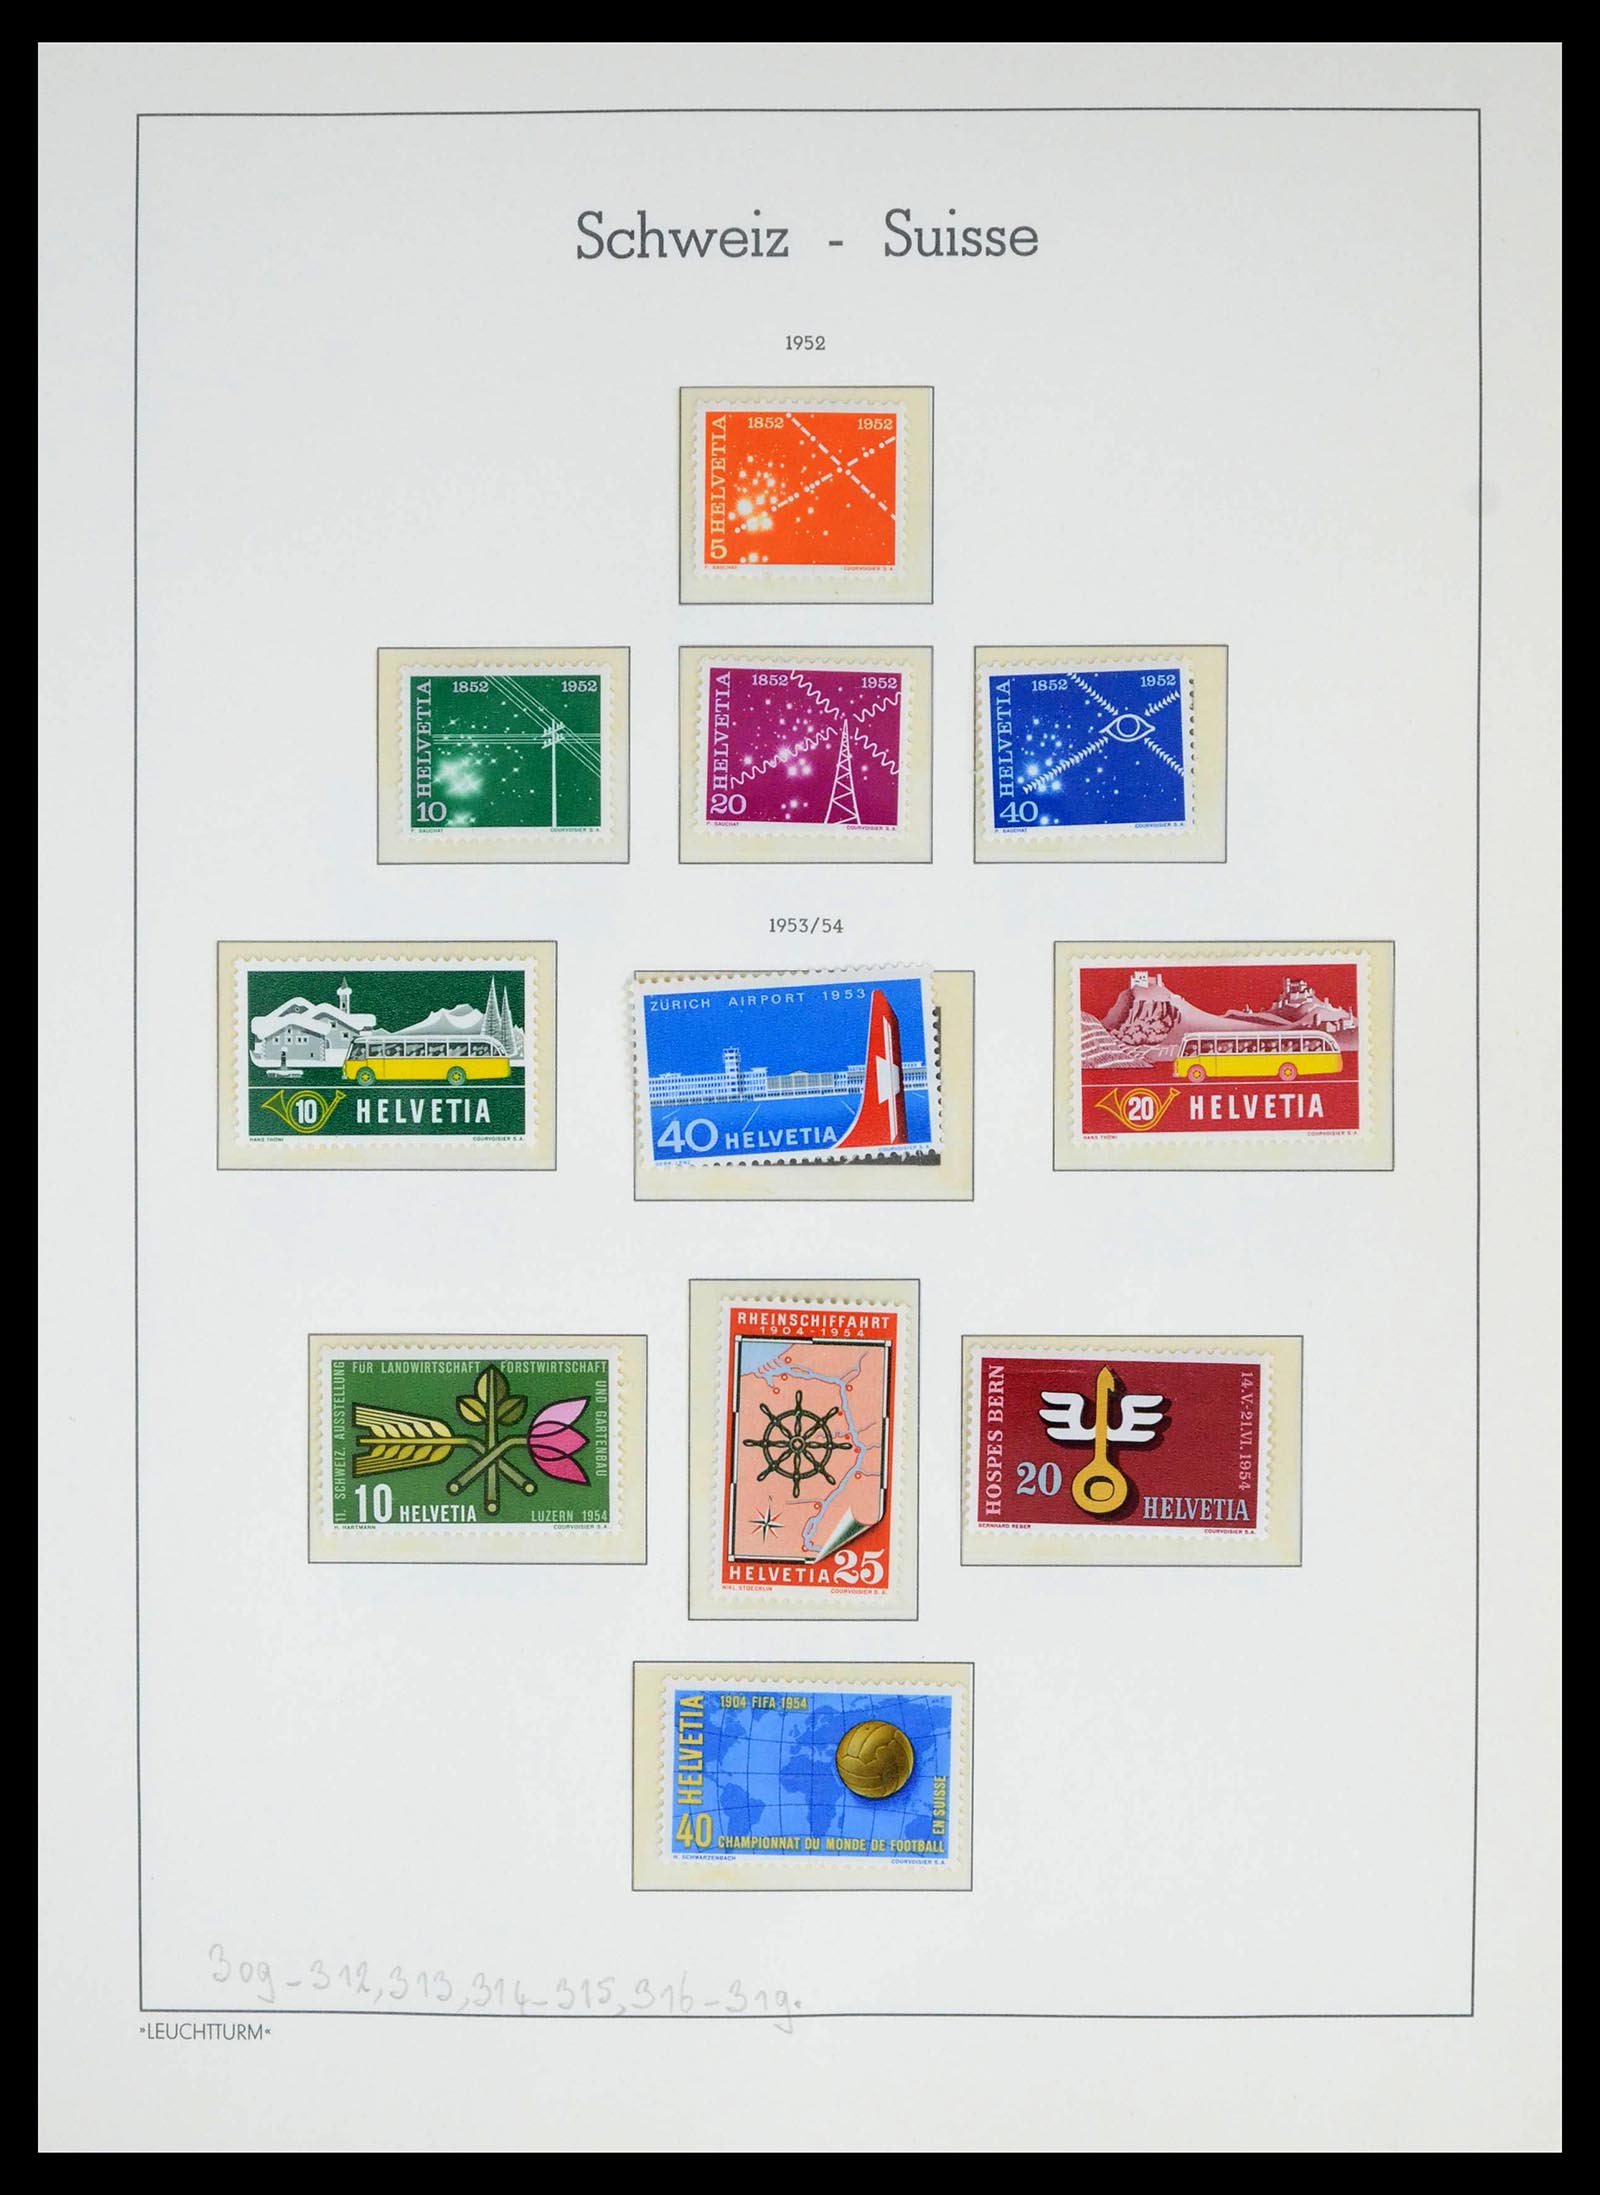 39420 0032 - Stamp collection 39420 Switzerland 1862-1974.